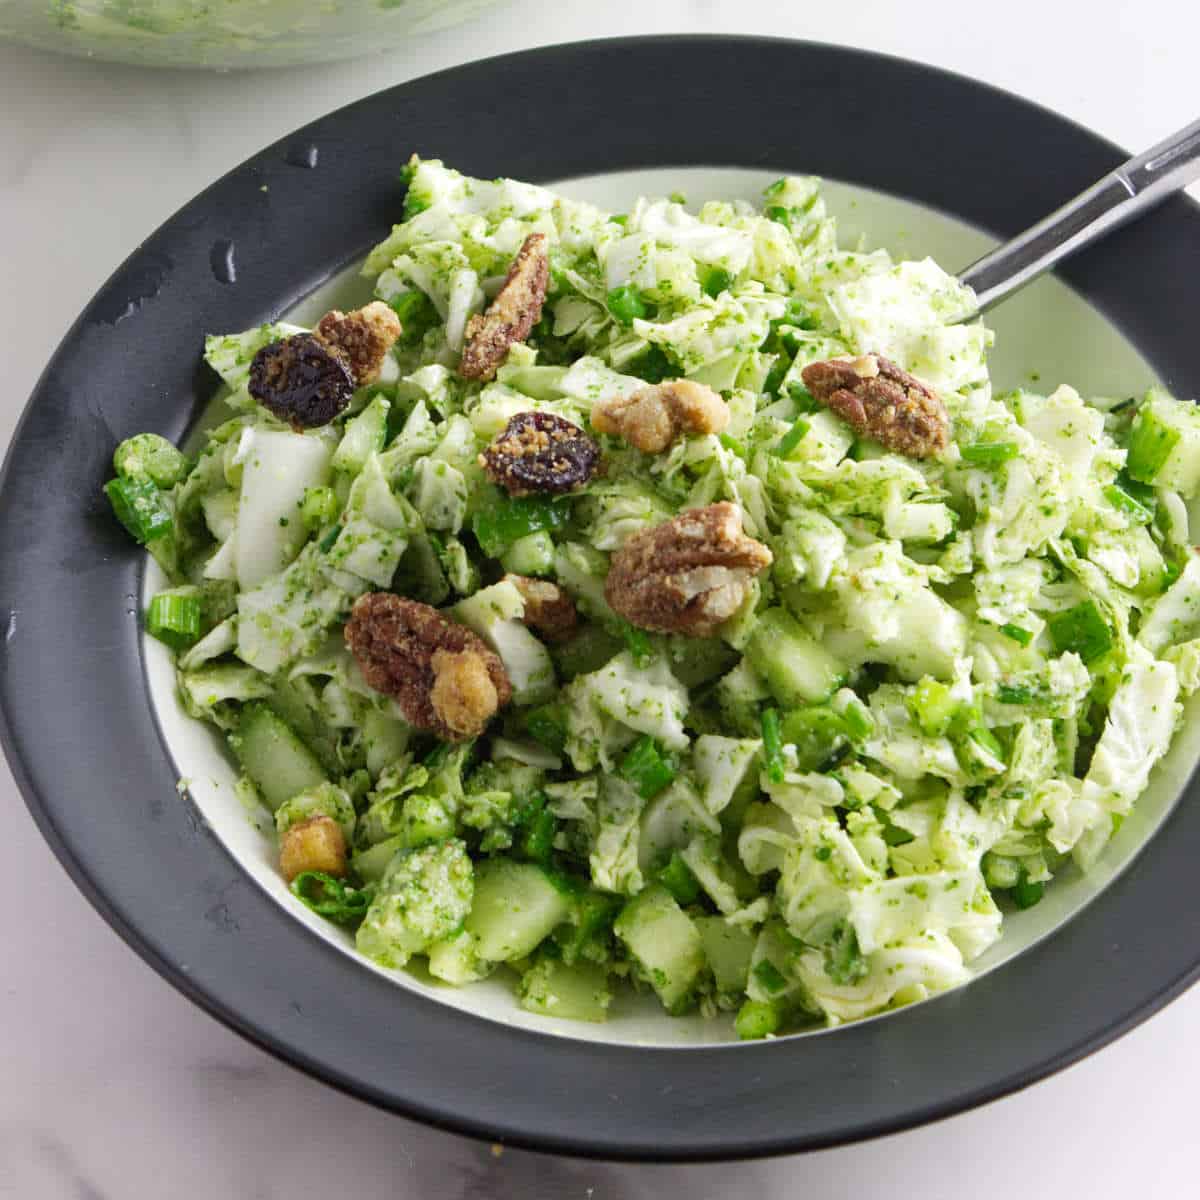 tiktok green goddess salad in a bowl with candied almond garnish.